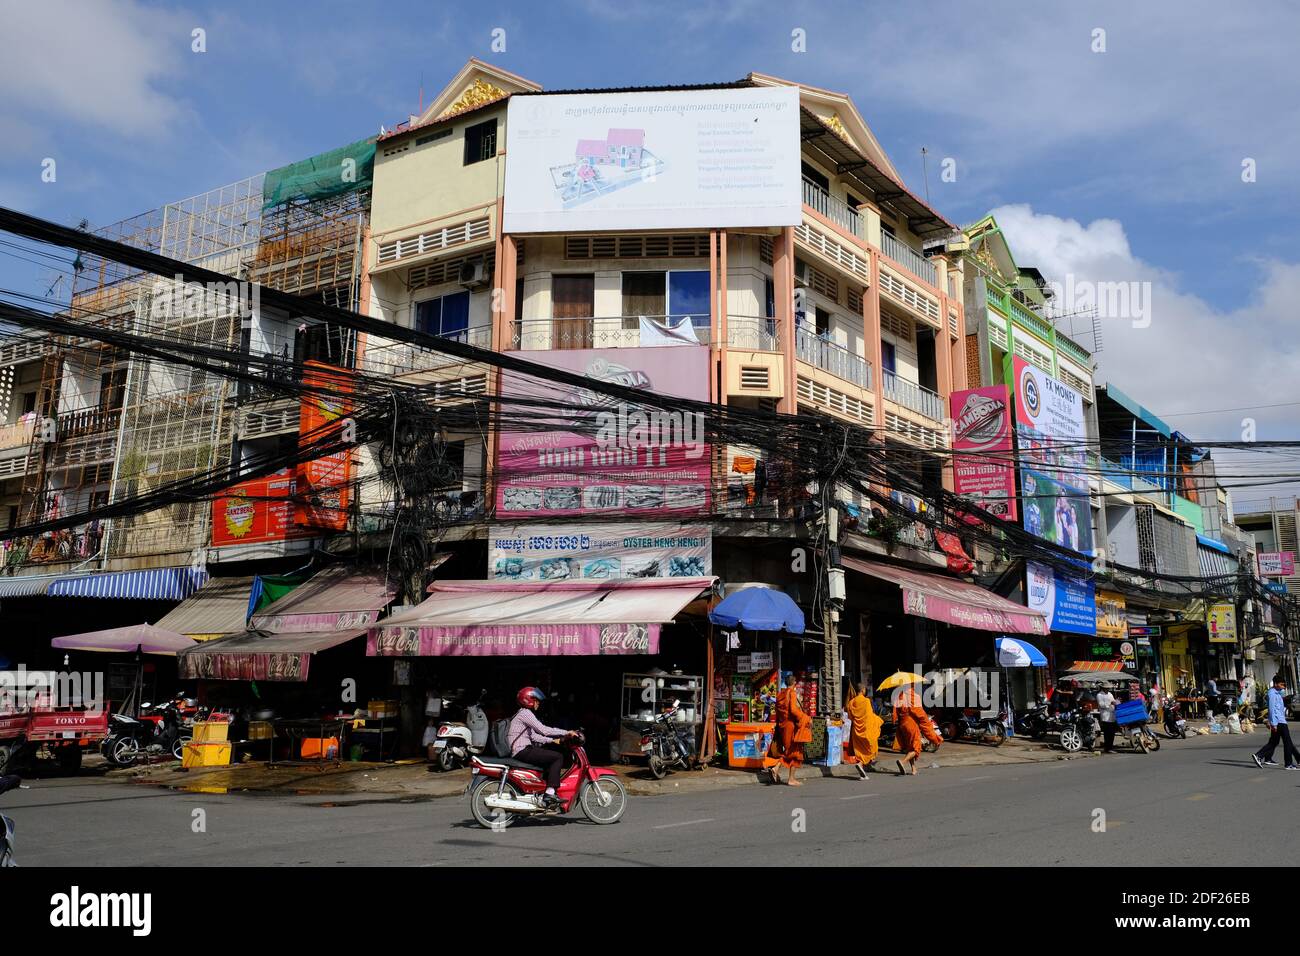 Cambodge Phnom Penh - photo de rue Preah Sisowath Quay Banque D'Images